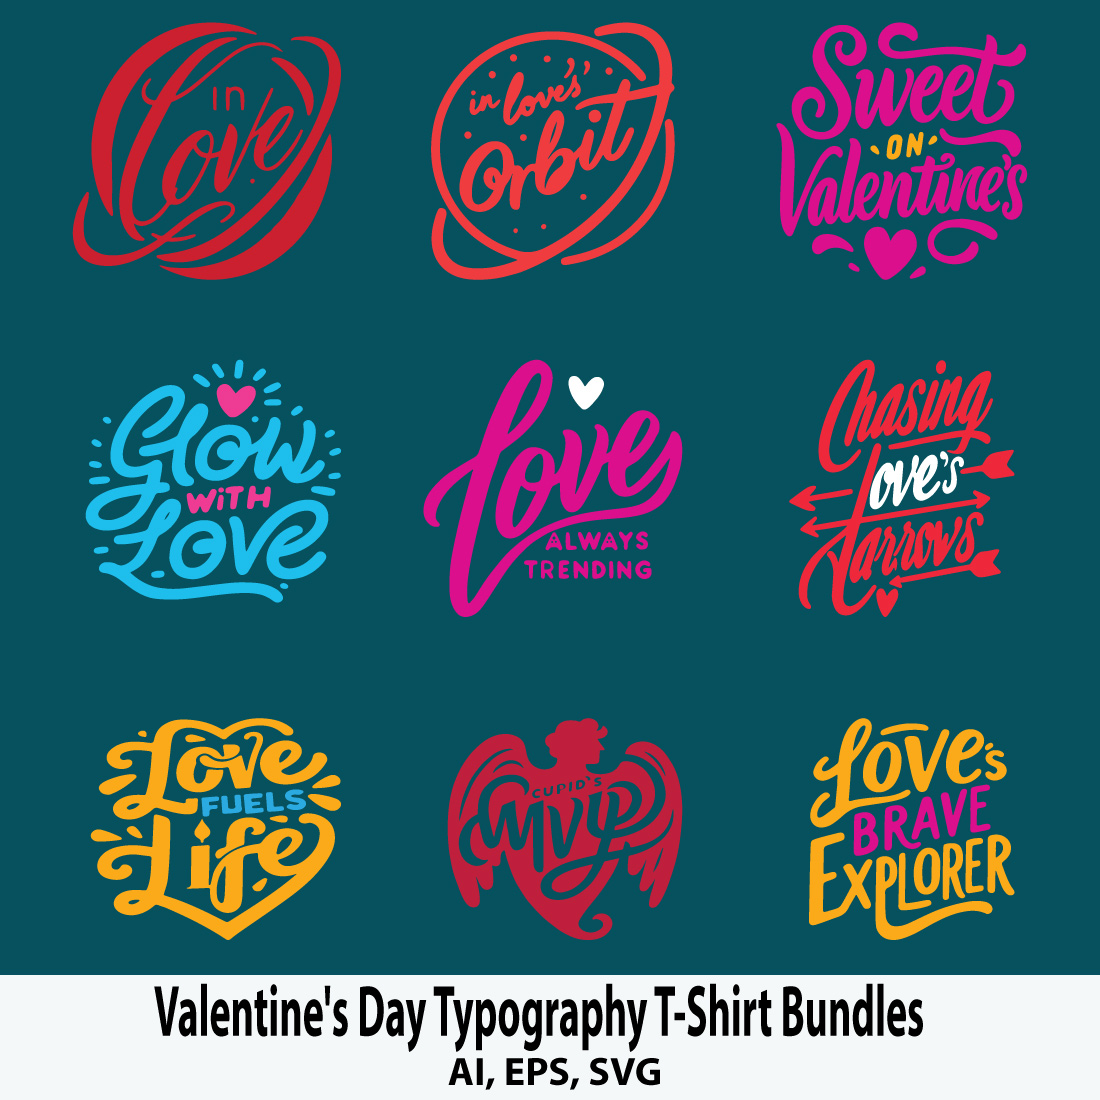 valentines day typography t shirt bundles 530